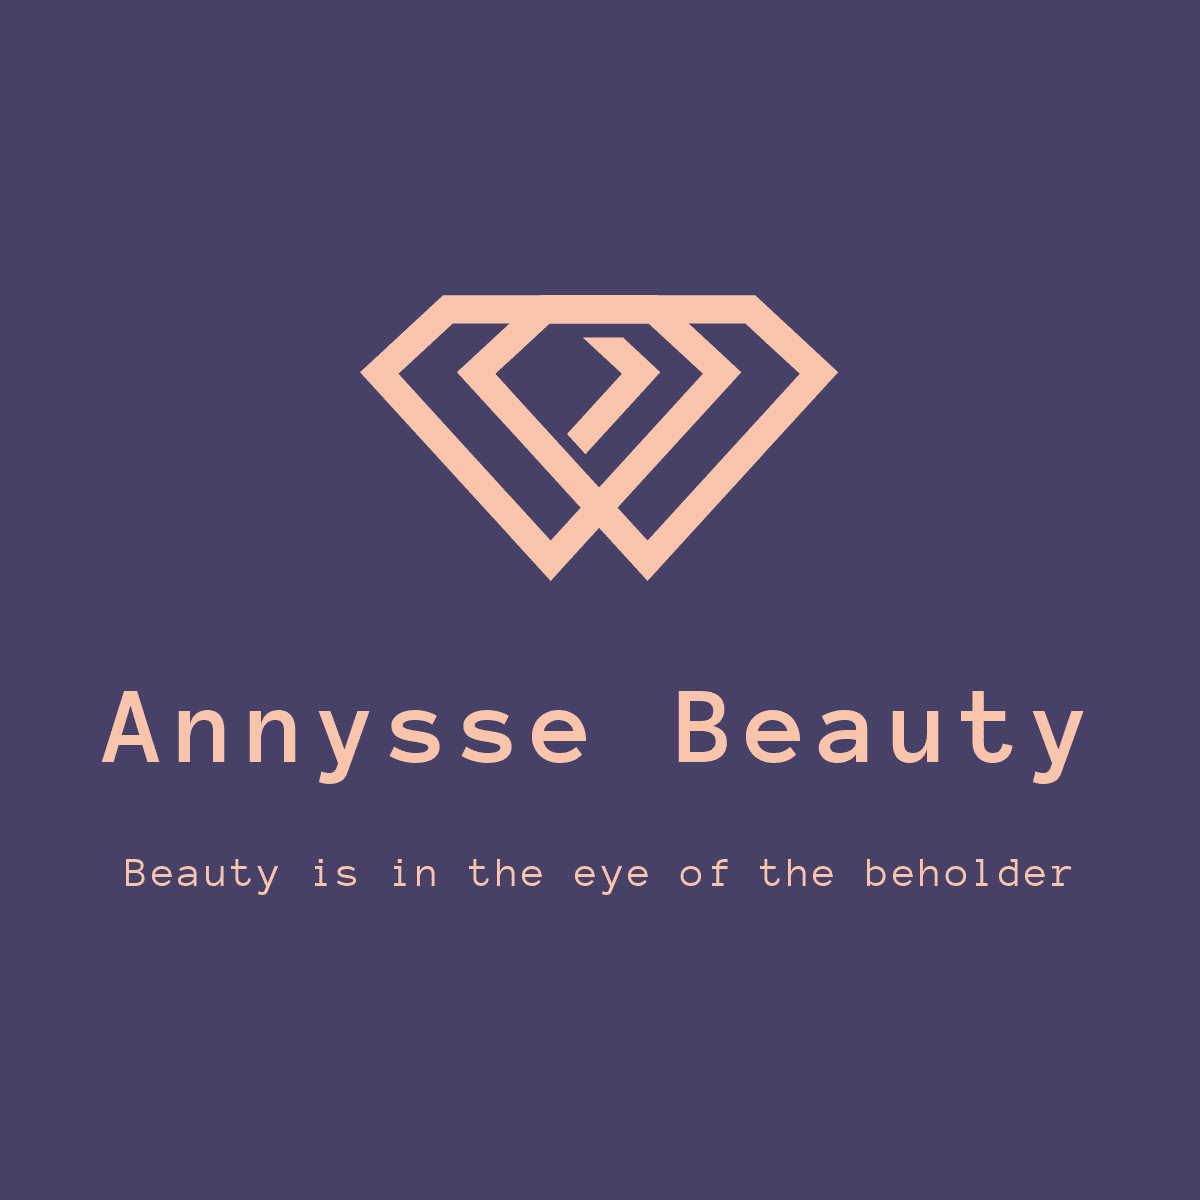 Annysse Beauty Lounge